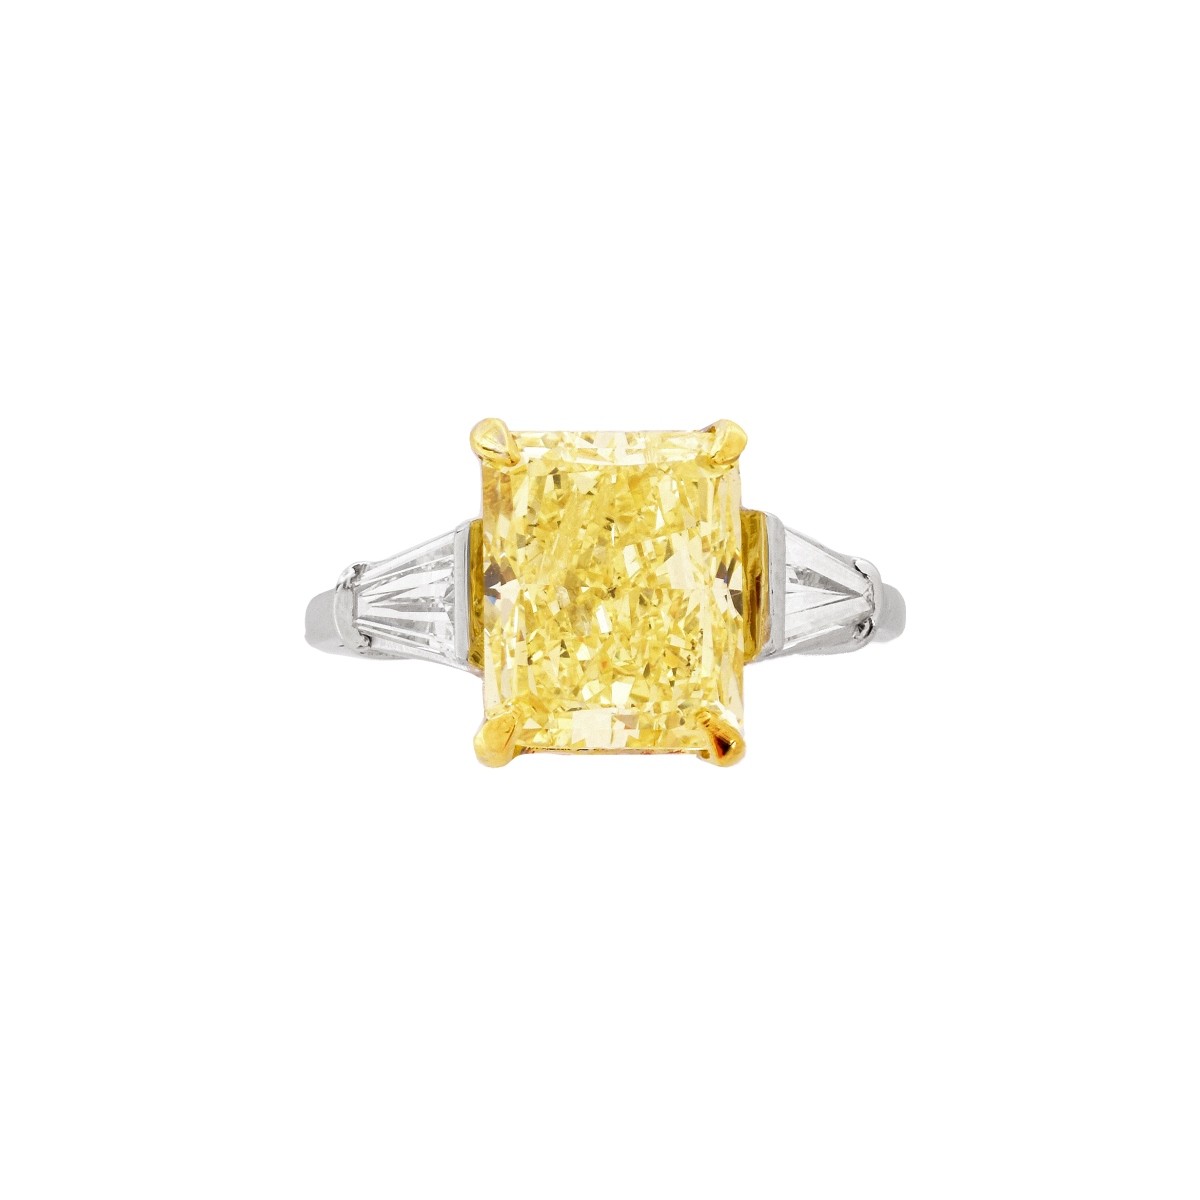 5.99 Fancy Yellow Diamond Engagement Ring